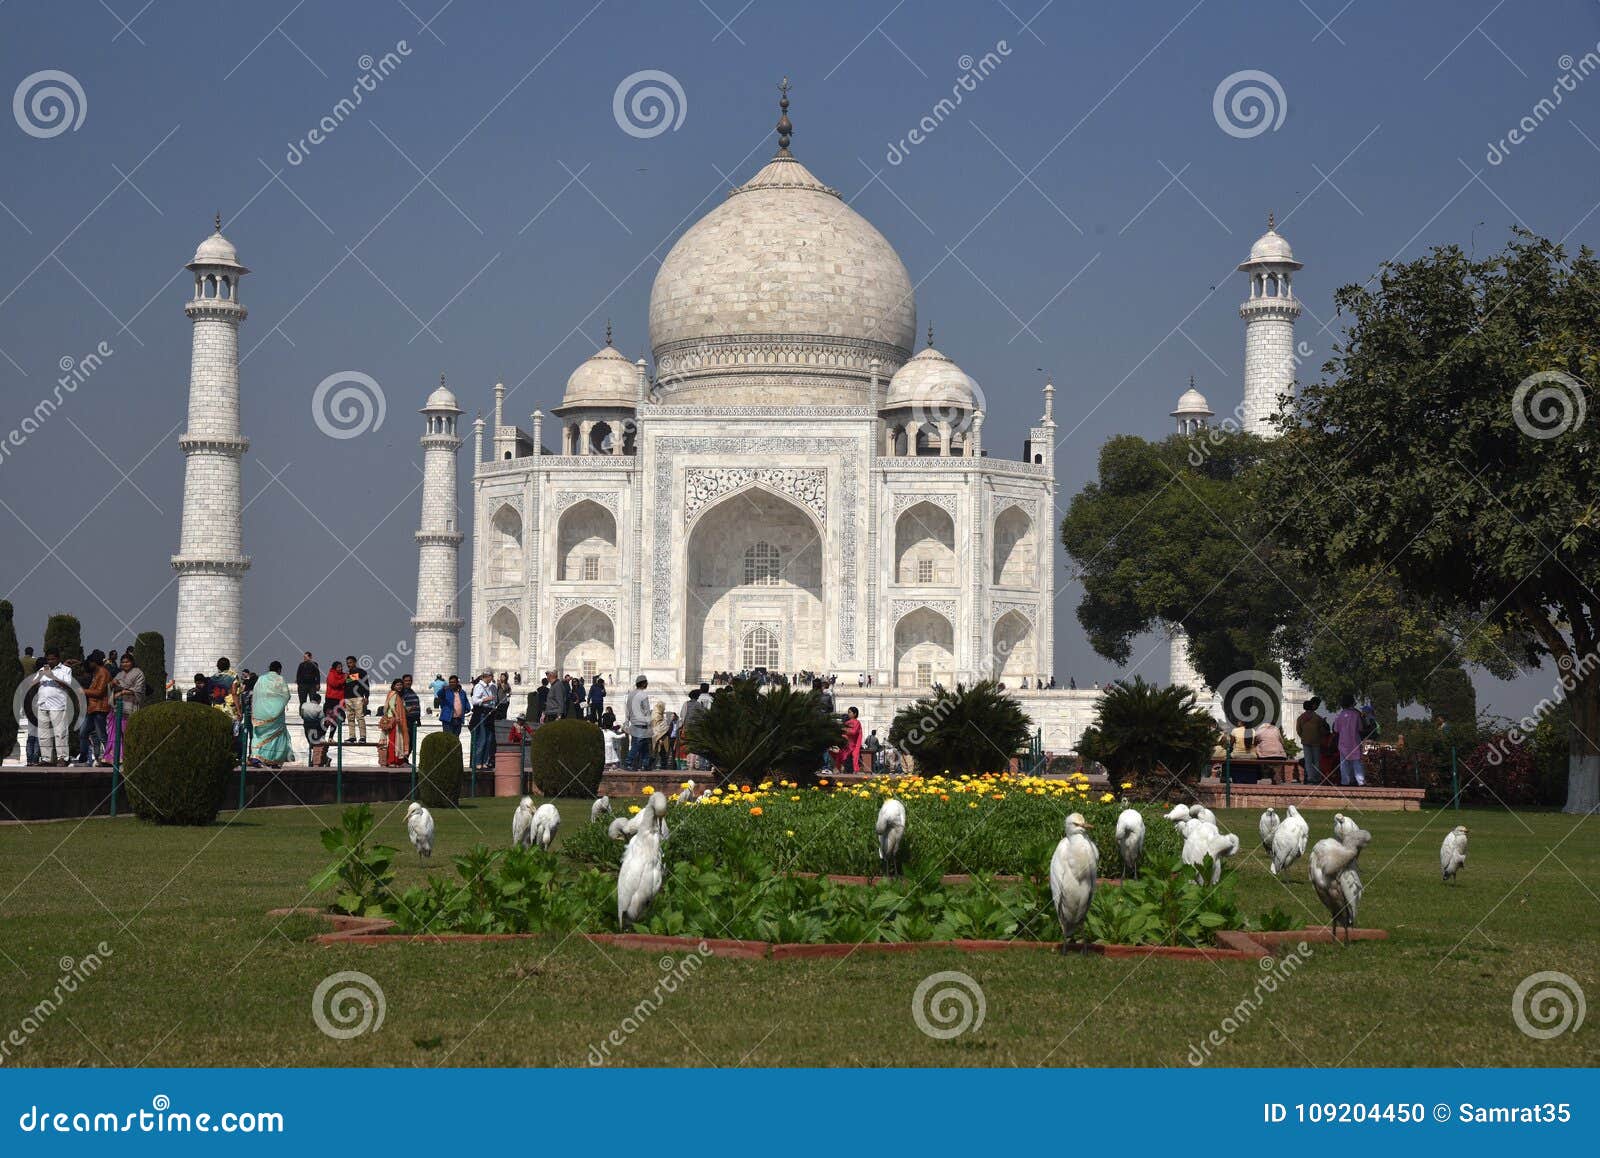 Taj Mahal - UNESCO World Heritage Centre